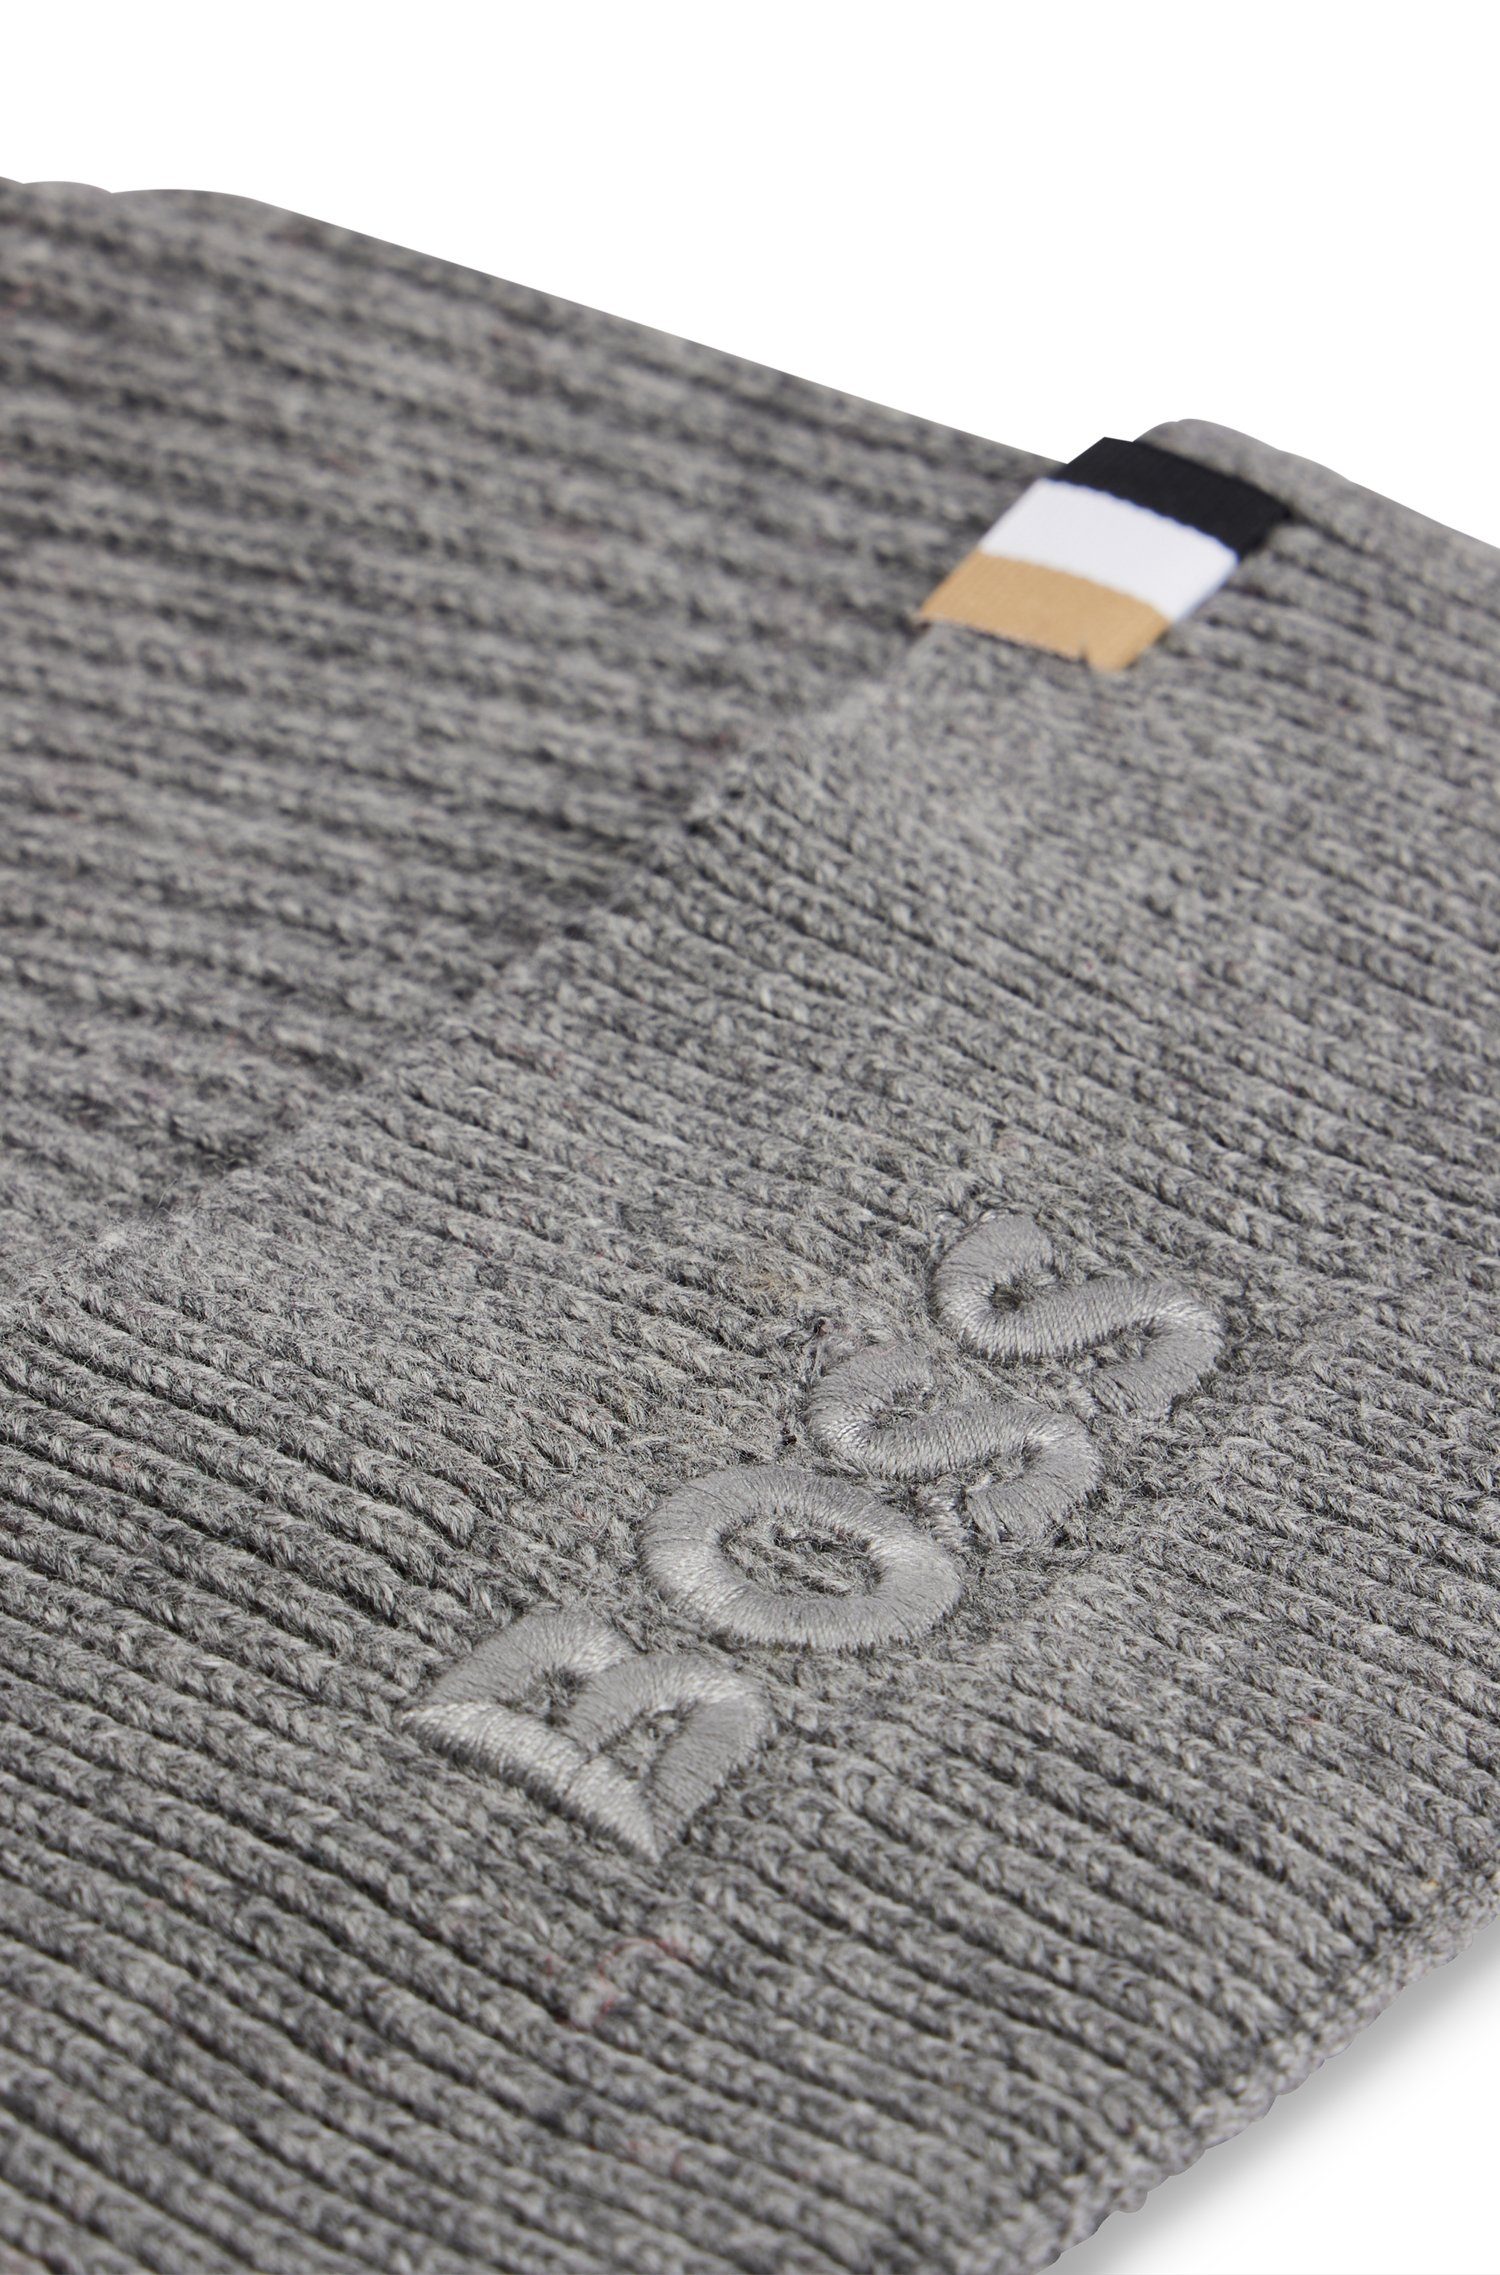 BOSS Strickmütze Magico_Hat mit BOSS Medium Logo-Stickerei Grey 030